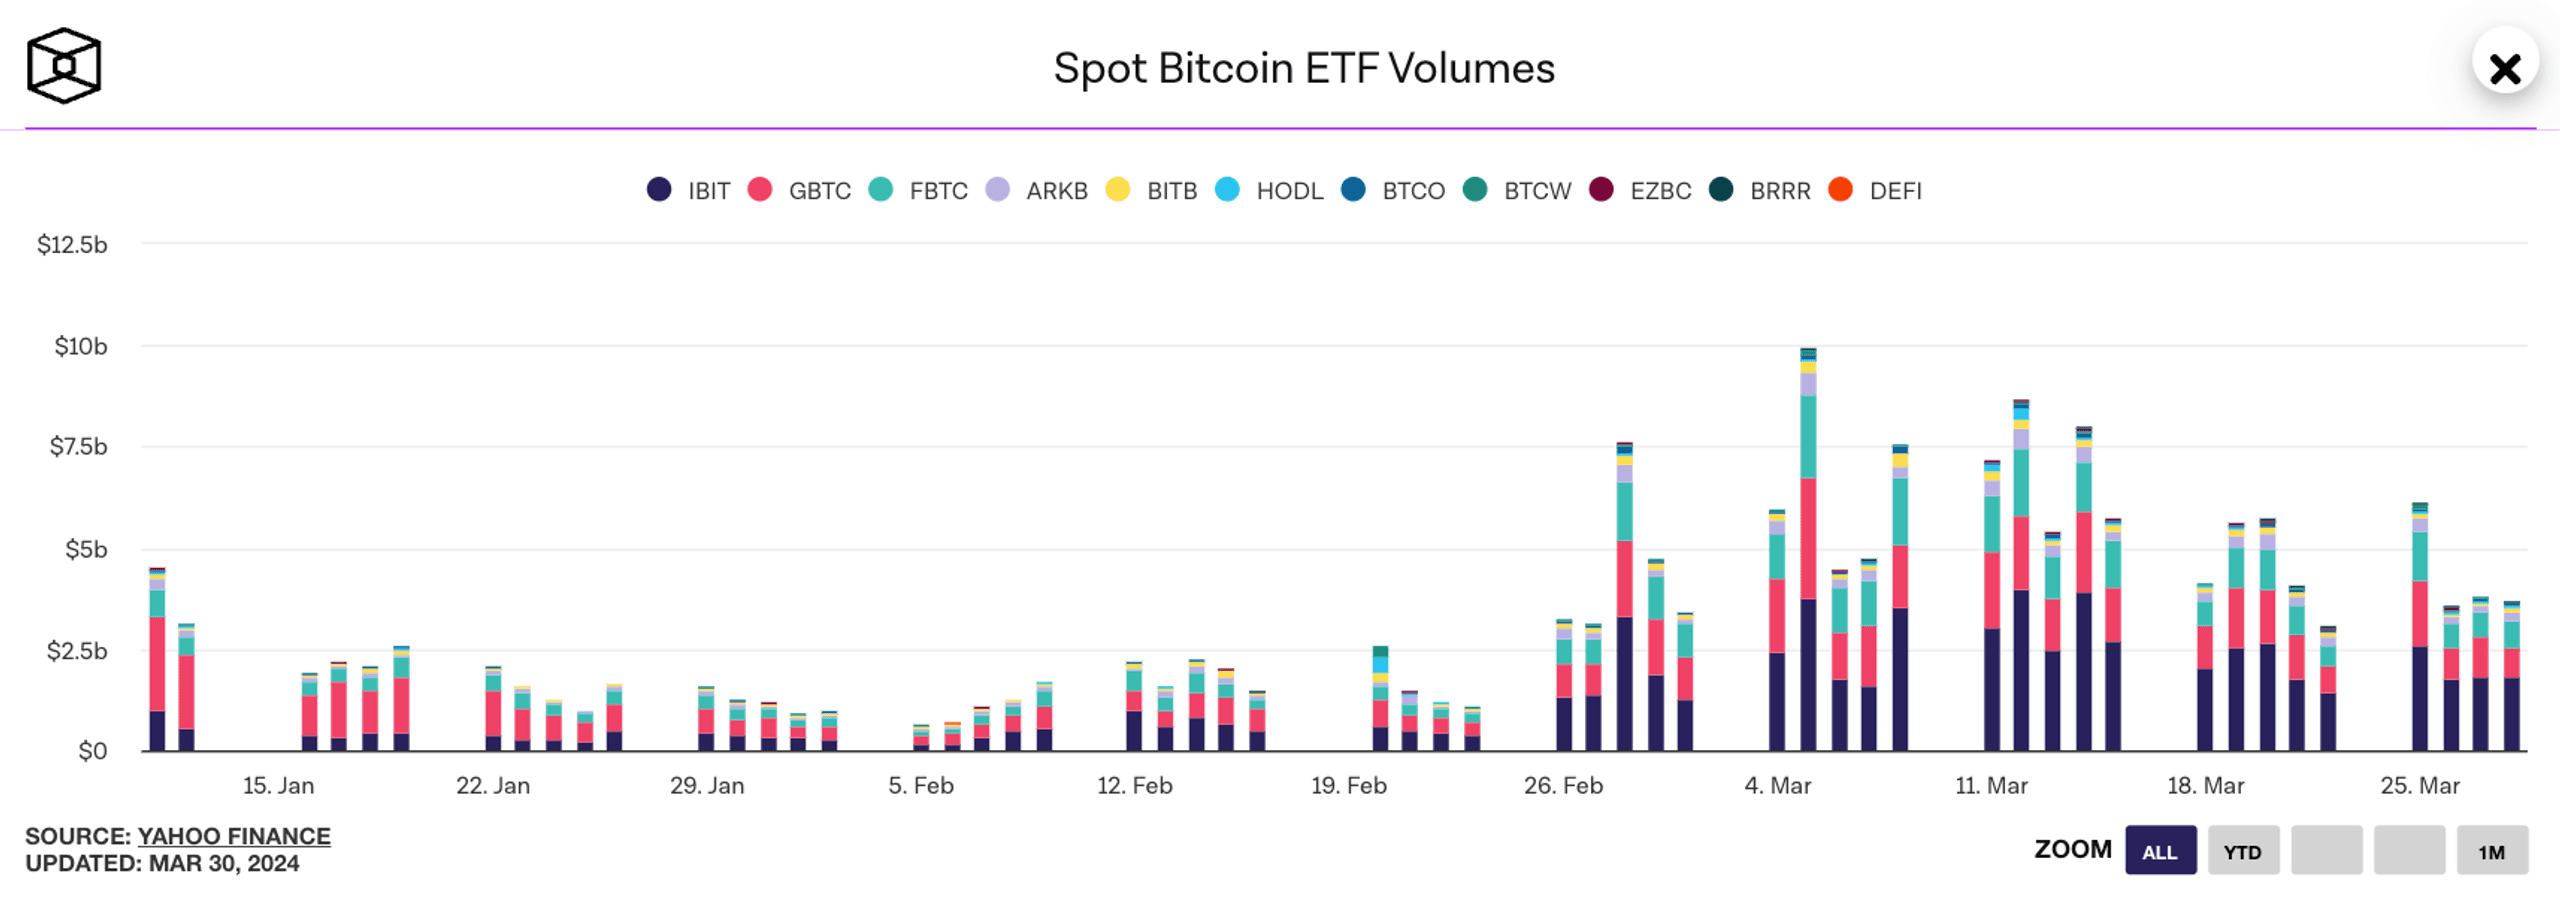 spot bitcoin etf volumes